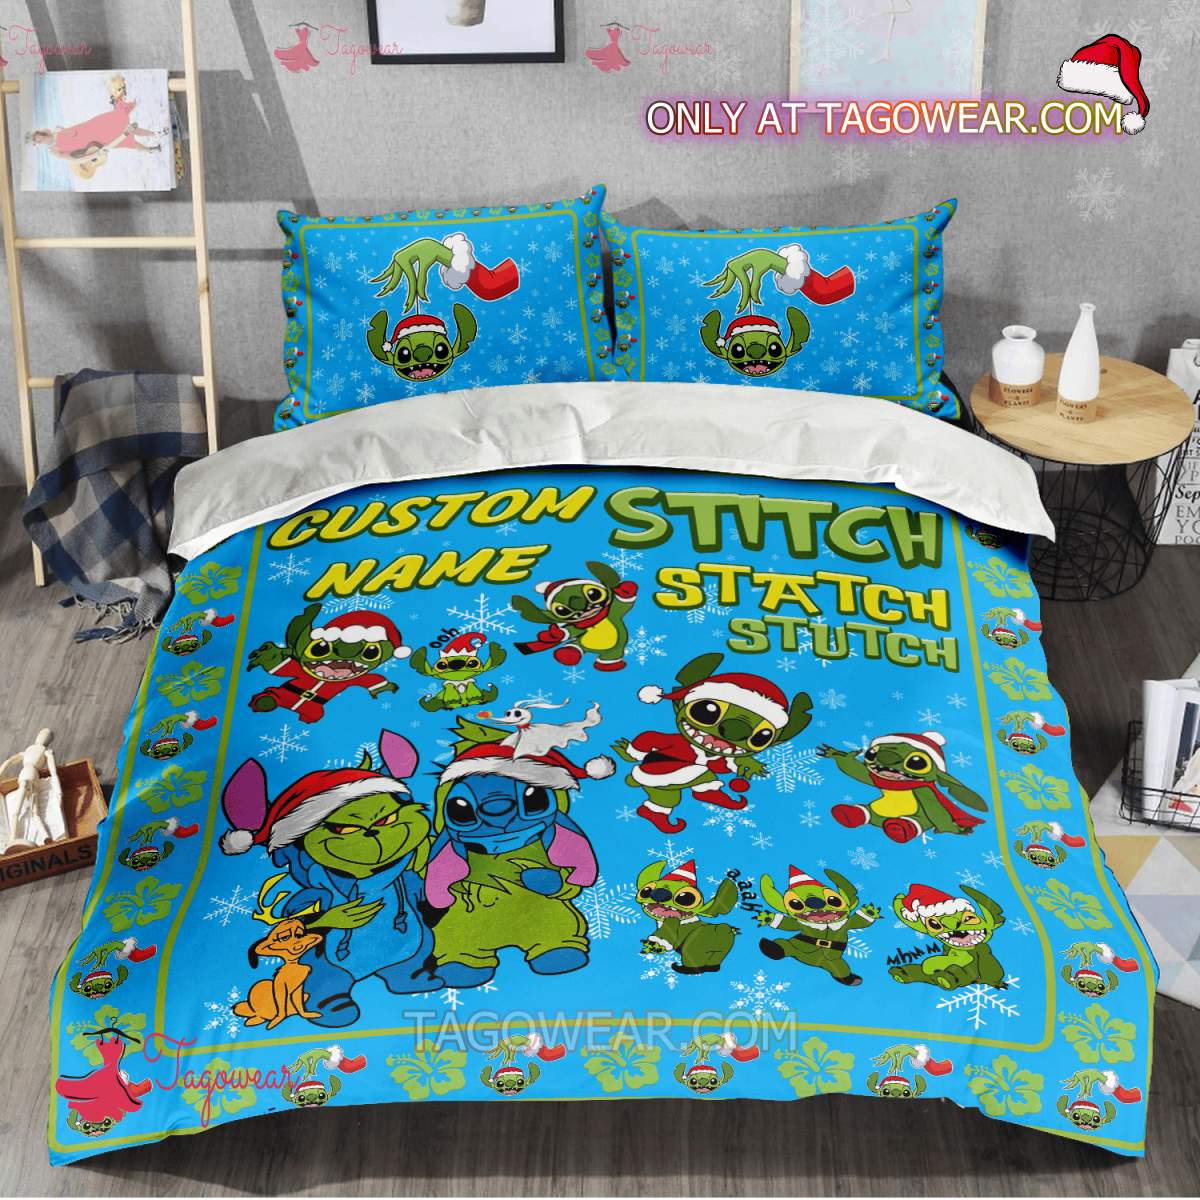 Stitch Statch Stutch Grinch Personalized Bedding Set a